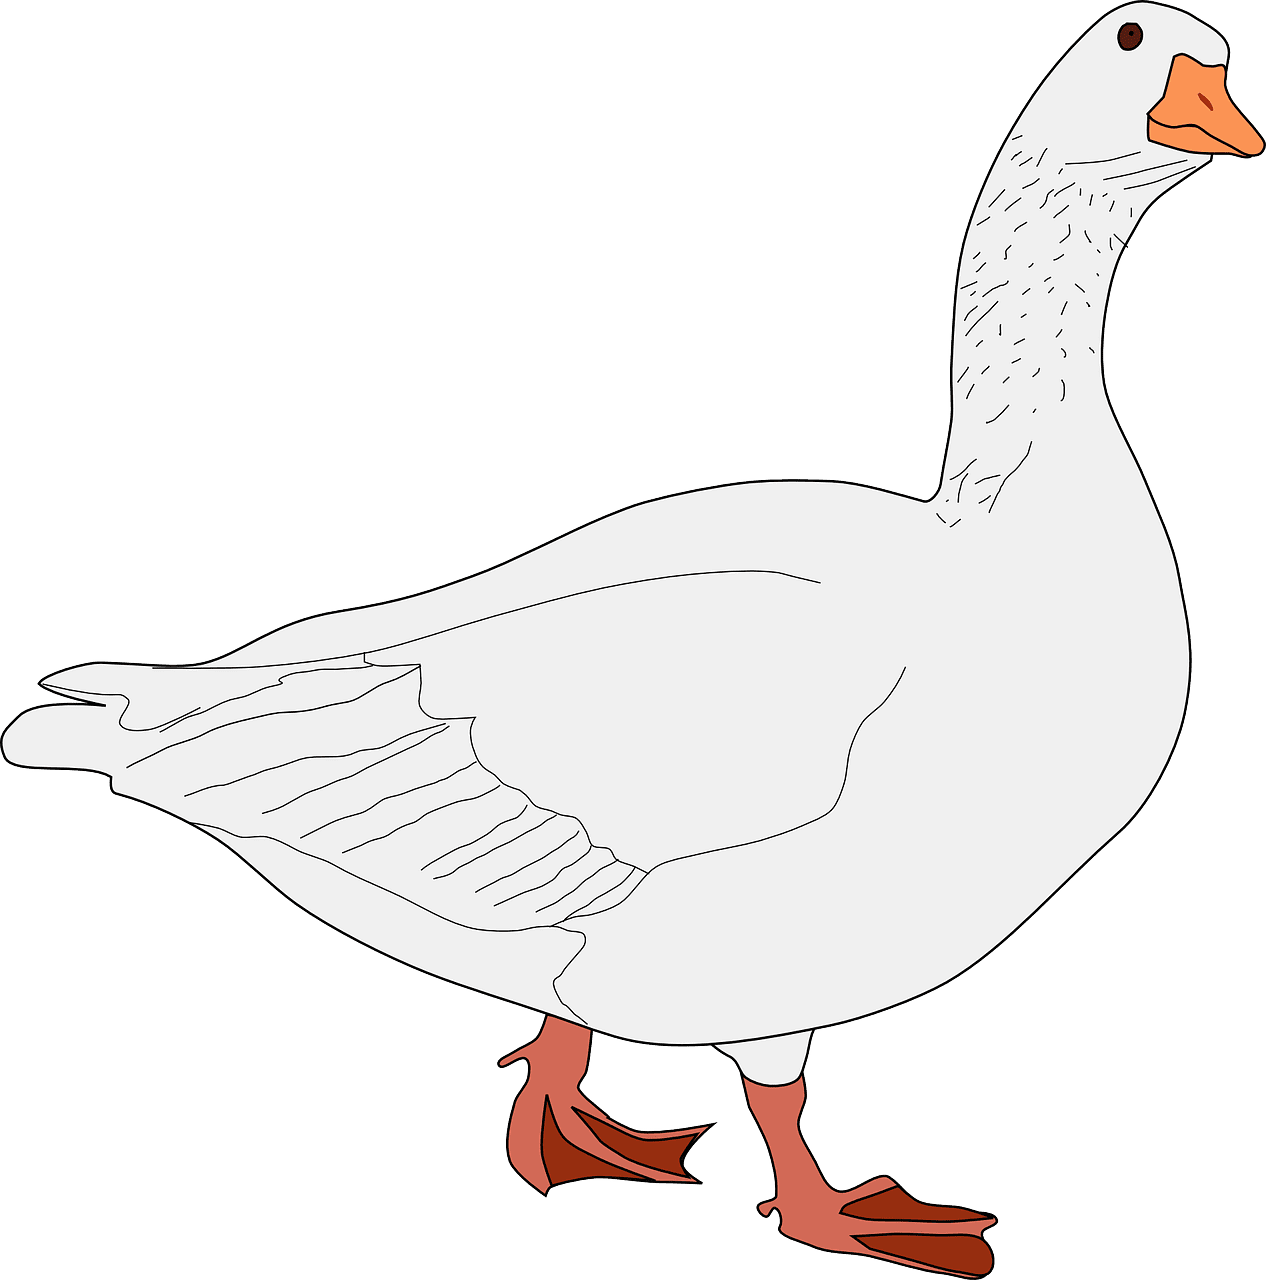 Goose bird animal vector graphic clipart